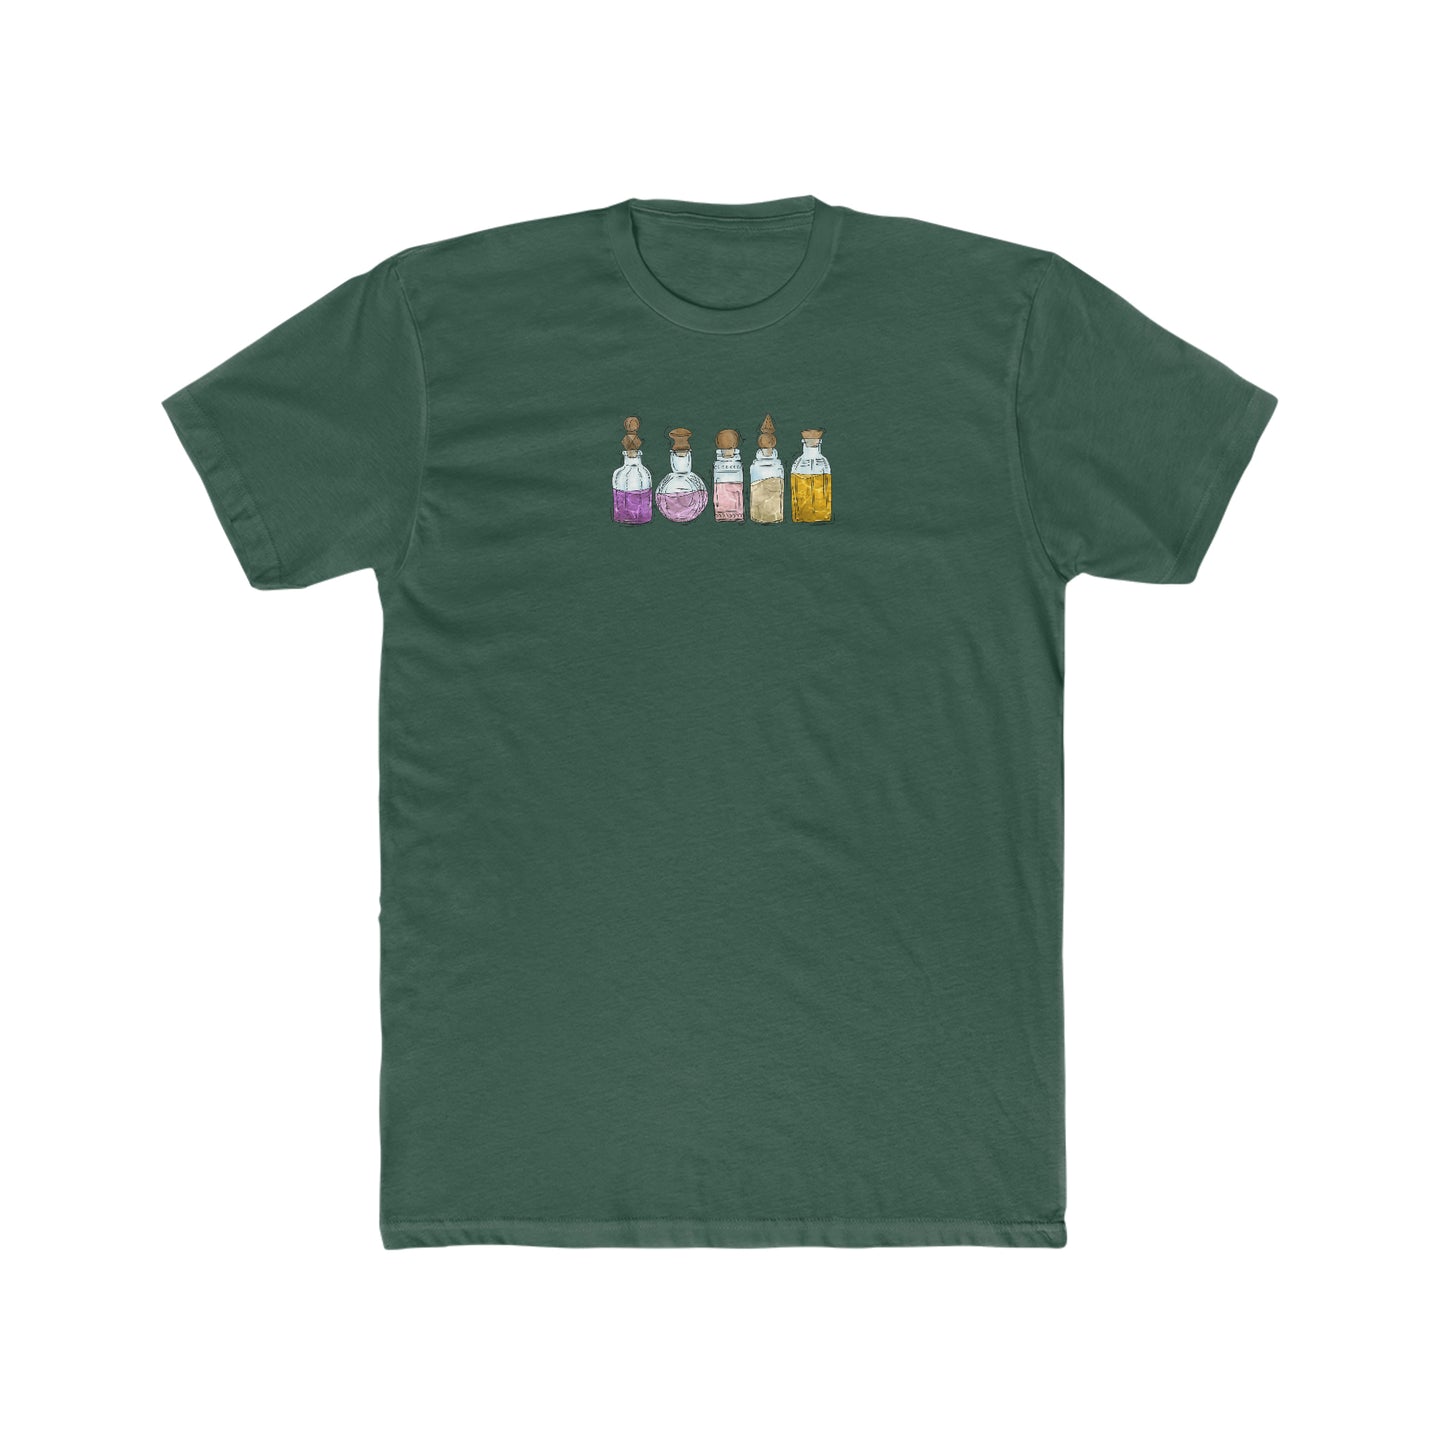 Trixic Pride Potion Bottles - Men's T-Shirt